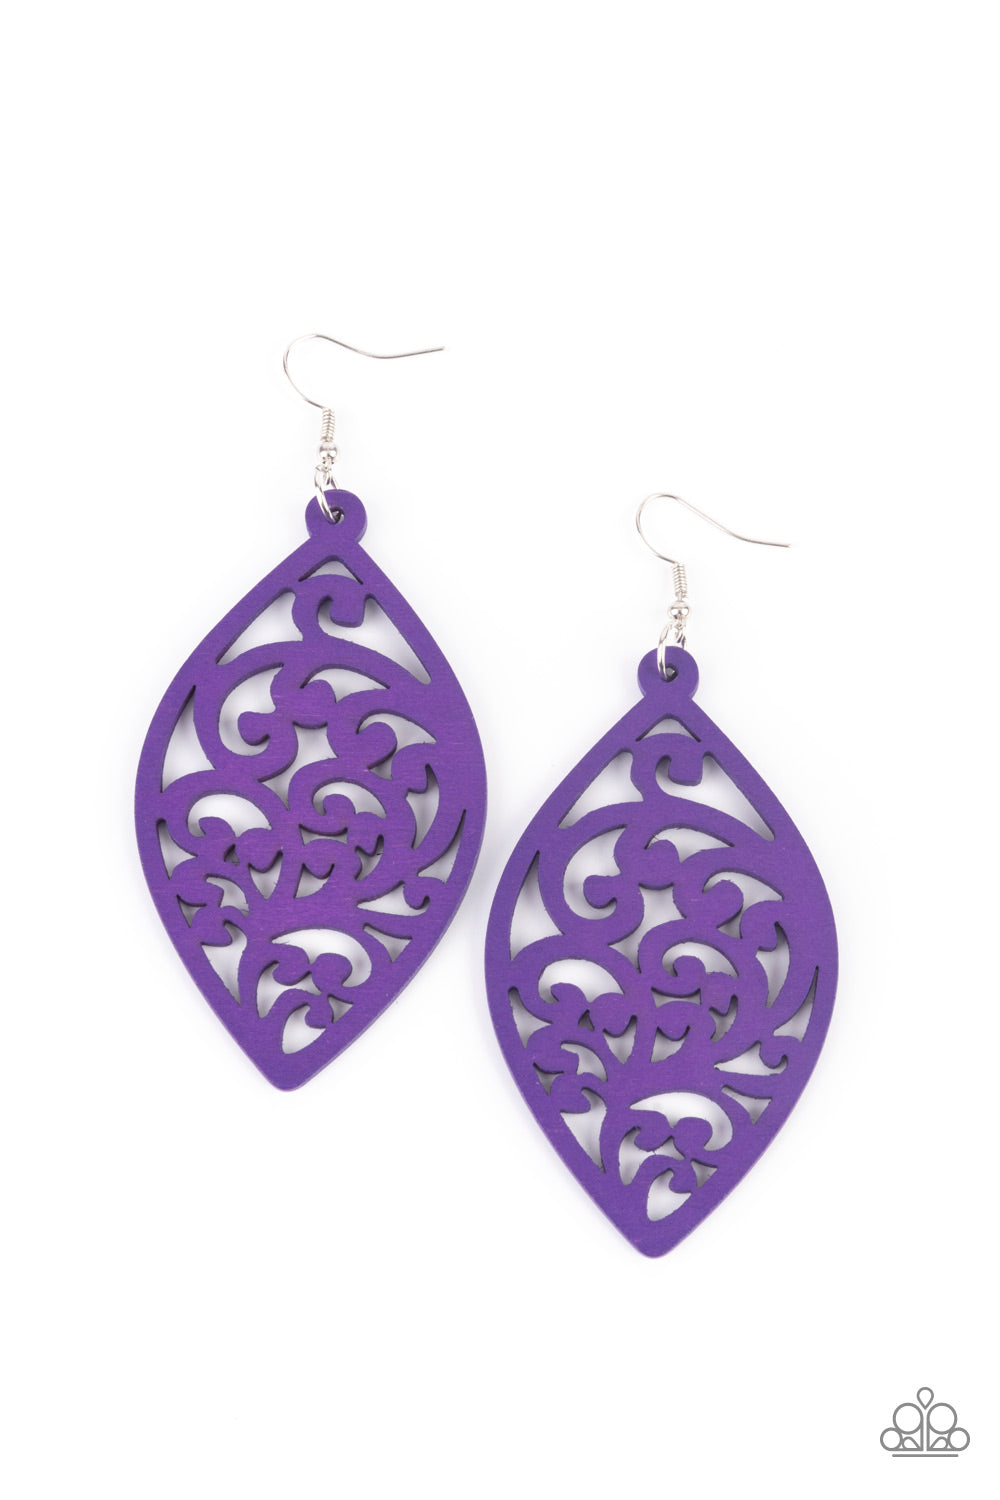 Coral Garden - purple - Paparazzi earrings – JewelryBlingThing